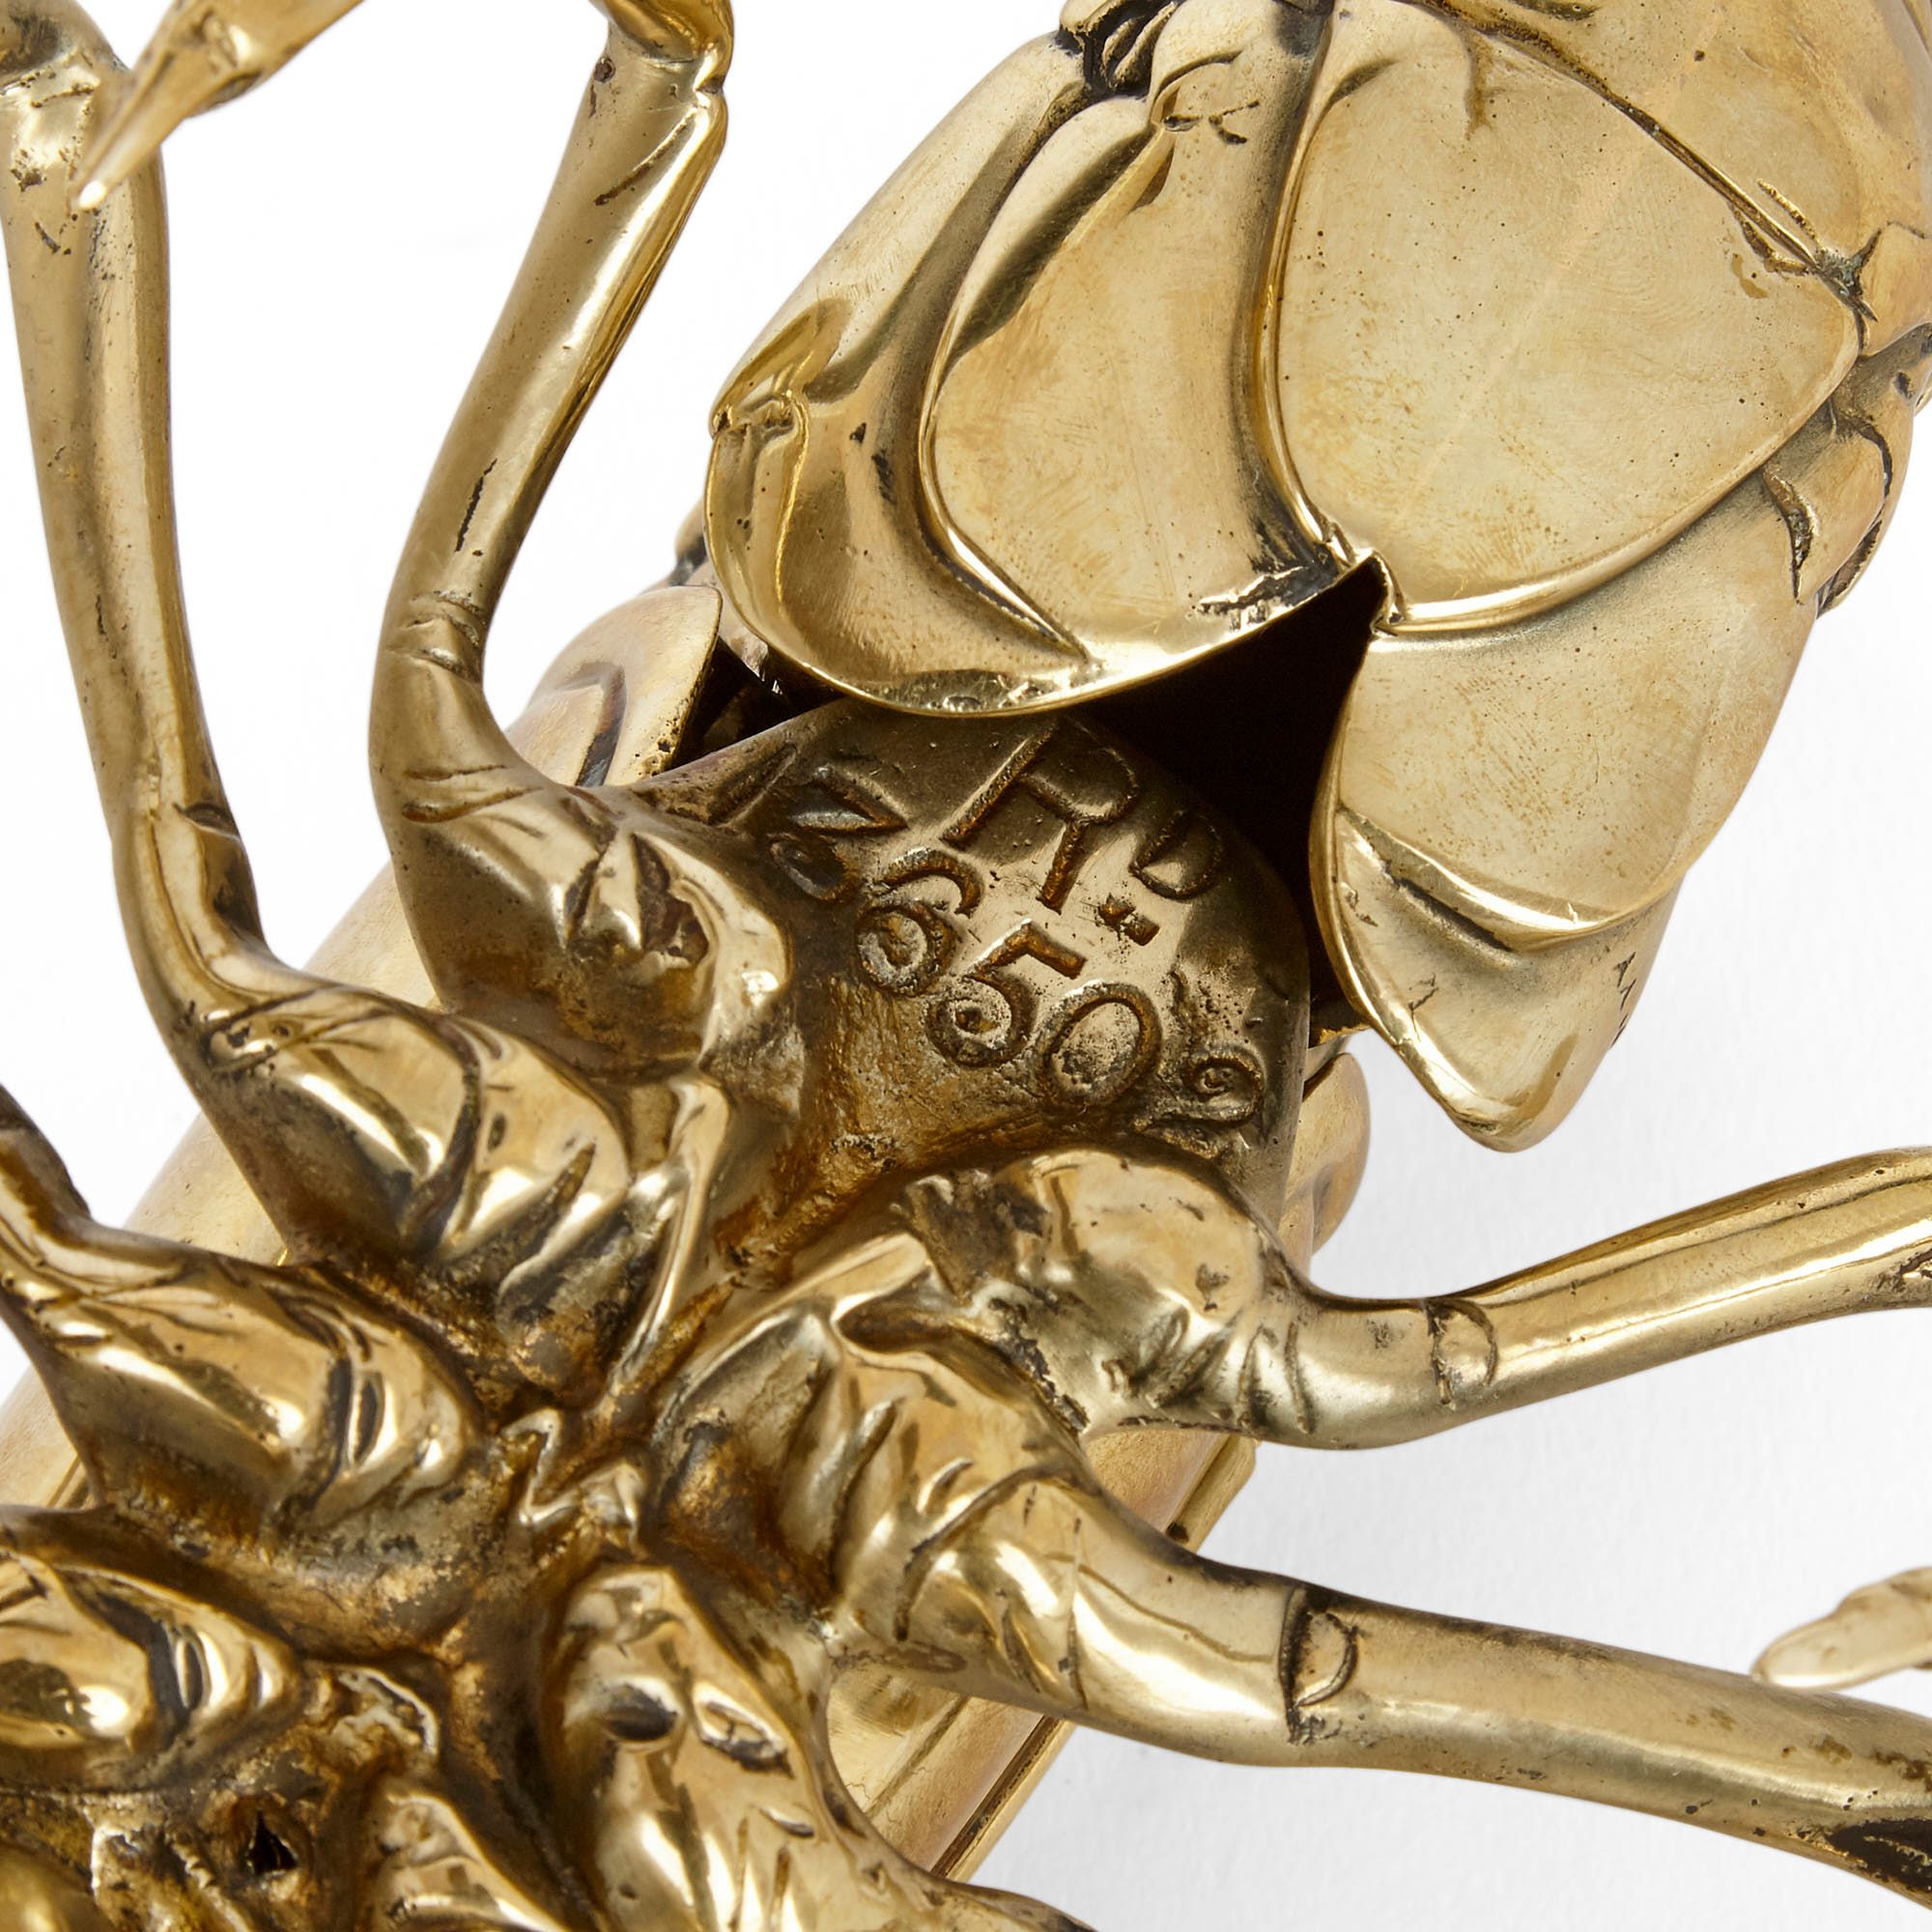 Antique Victorian articulated brass lobster-form inkstand